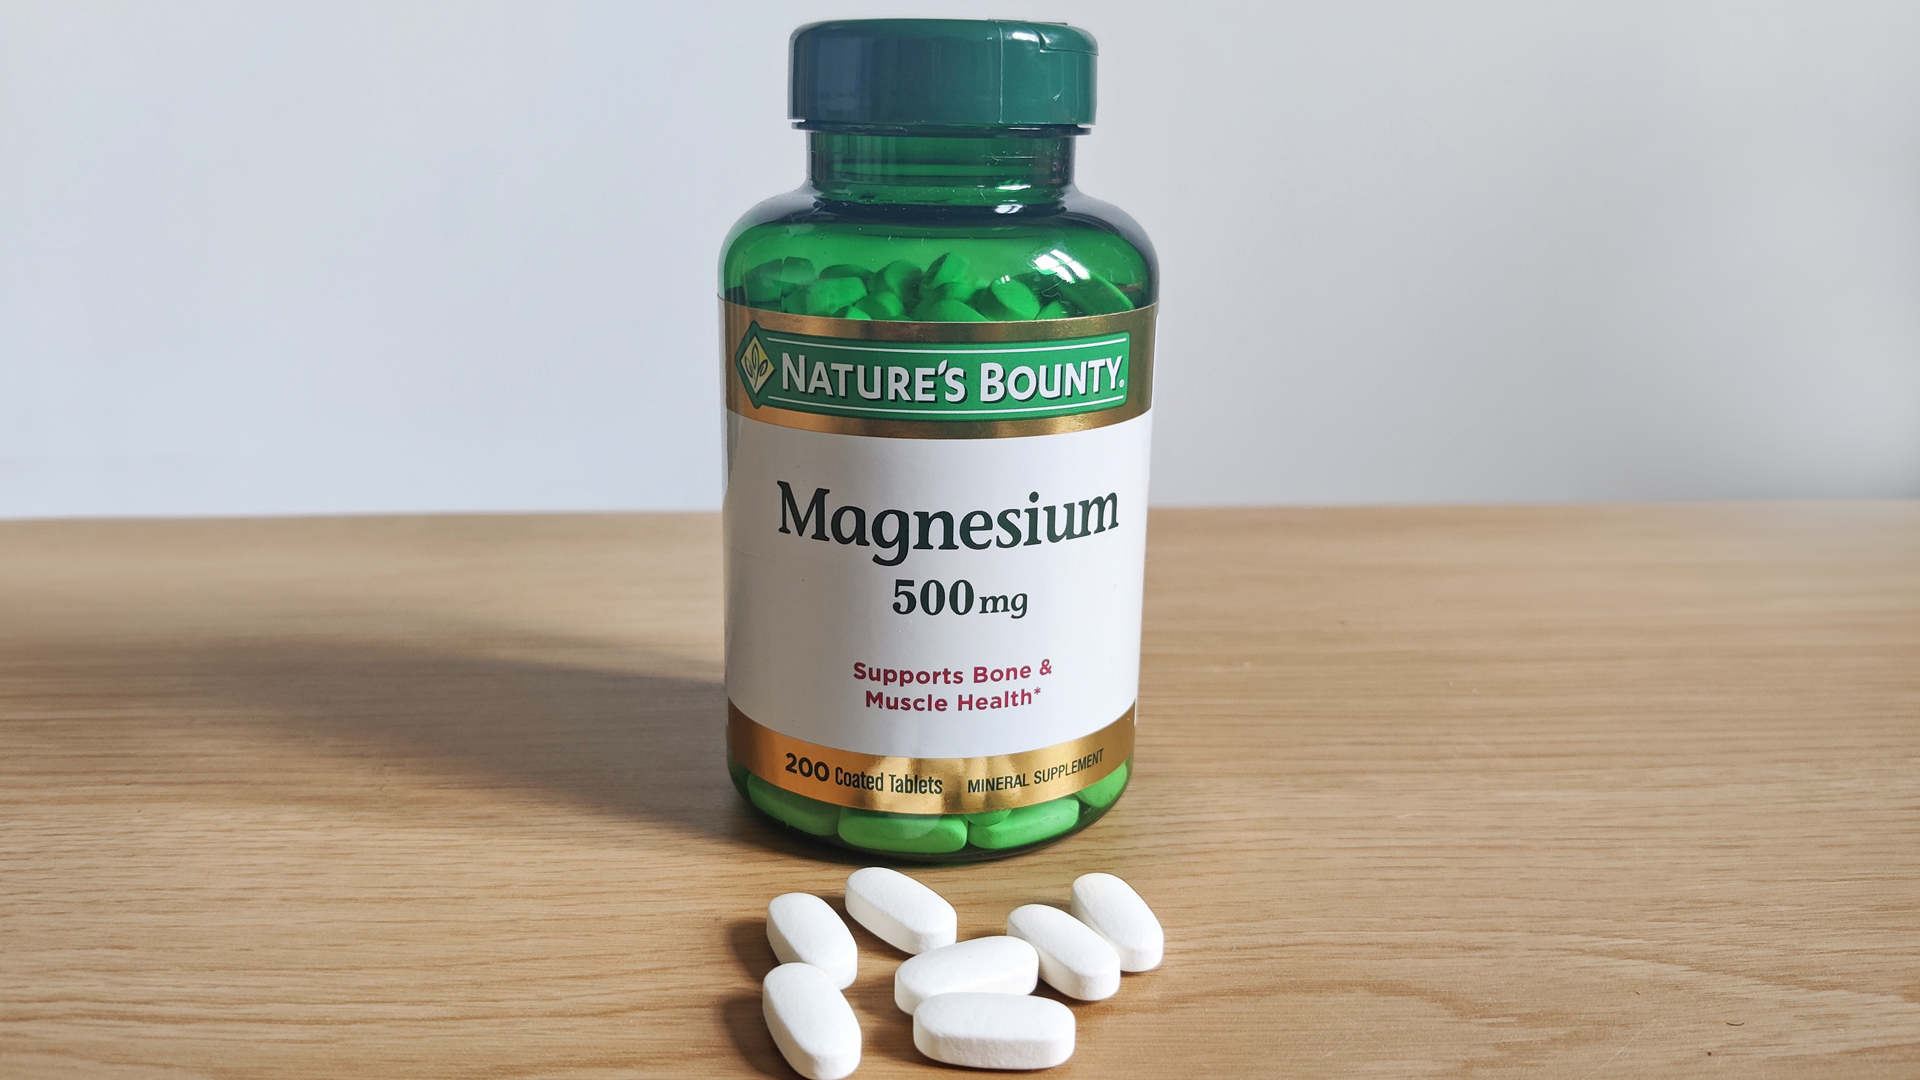 Nature's Bounty magnesium oxide supplement